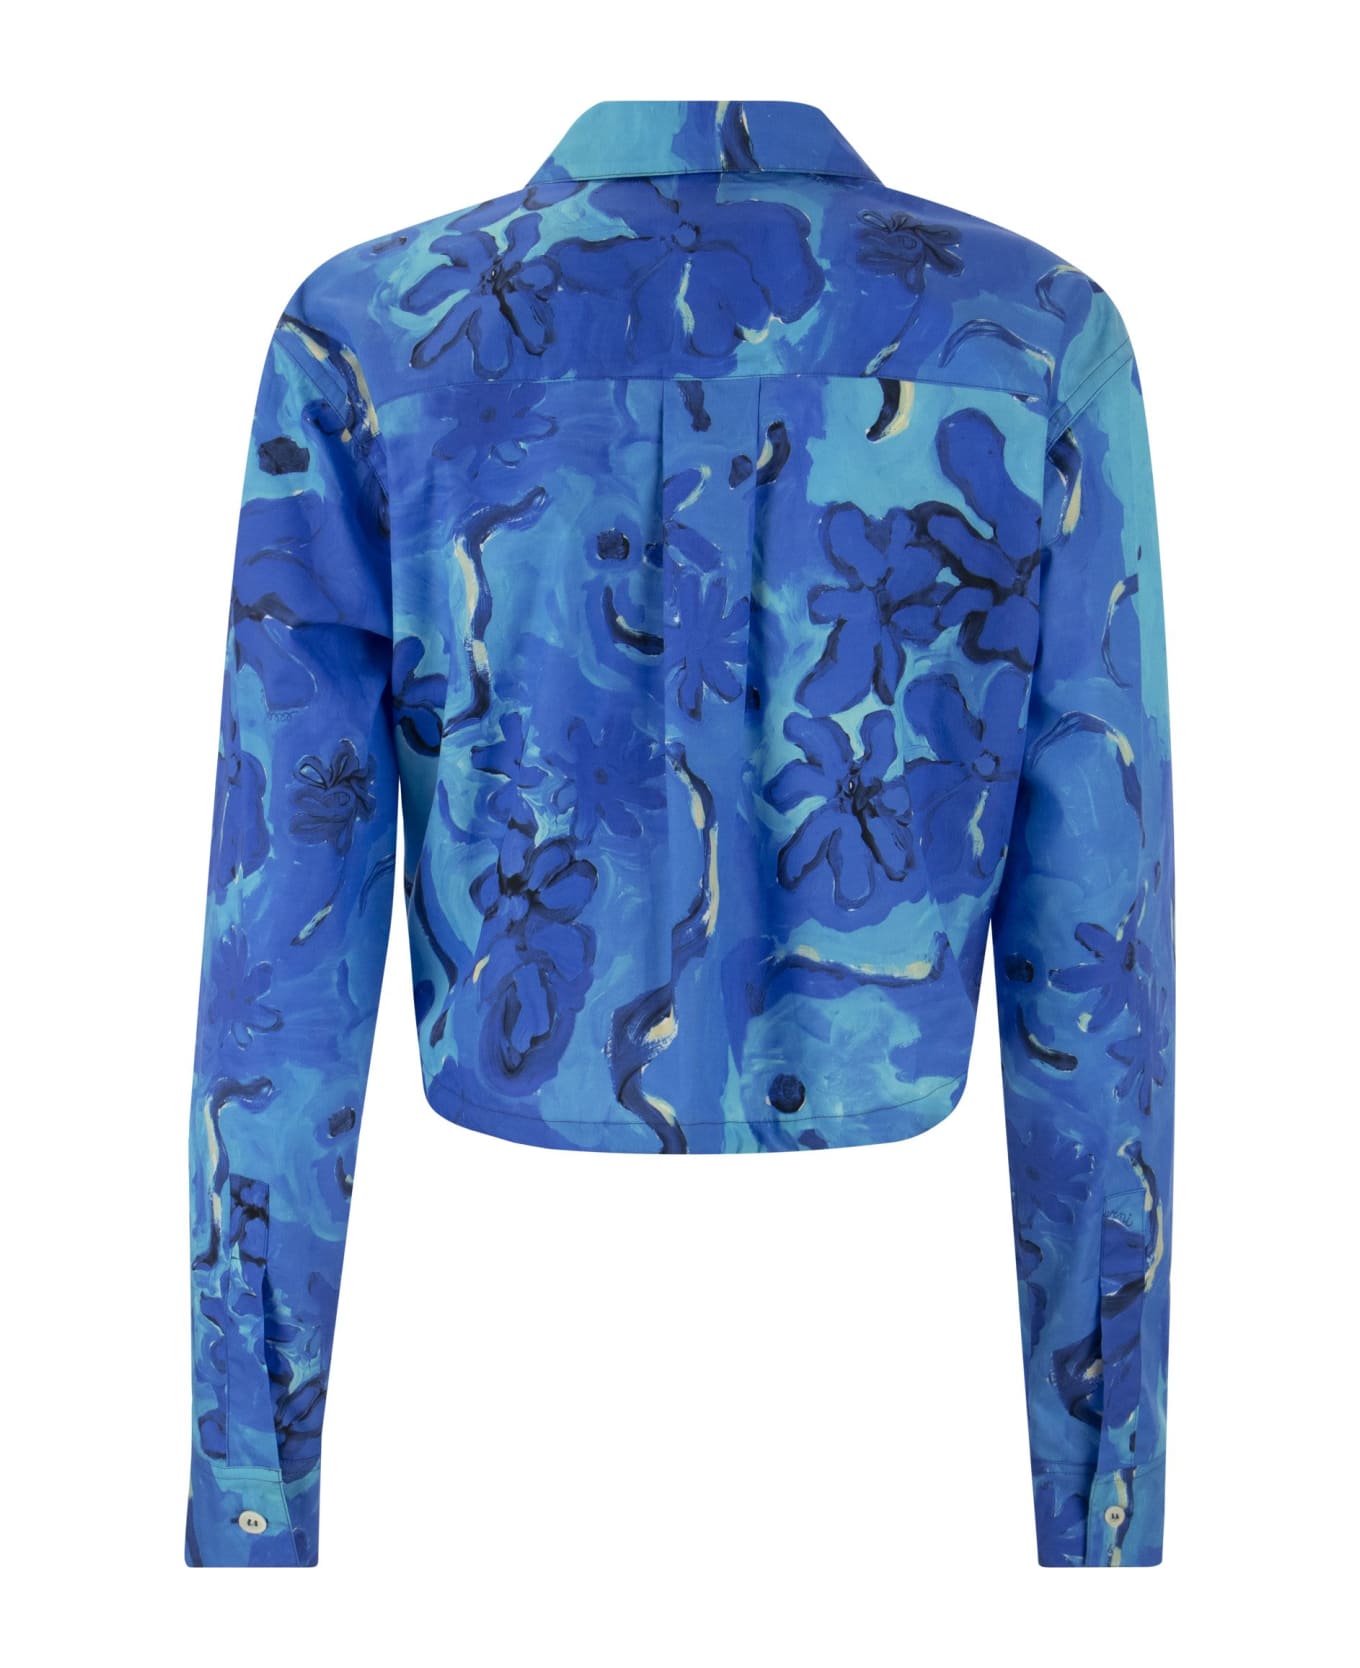 Marni Cotton Shirt With Drawstring - Cobalt Blue シャツ